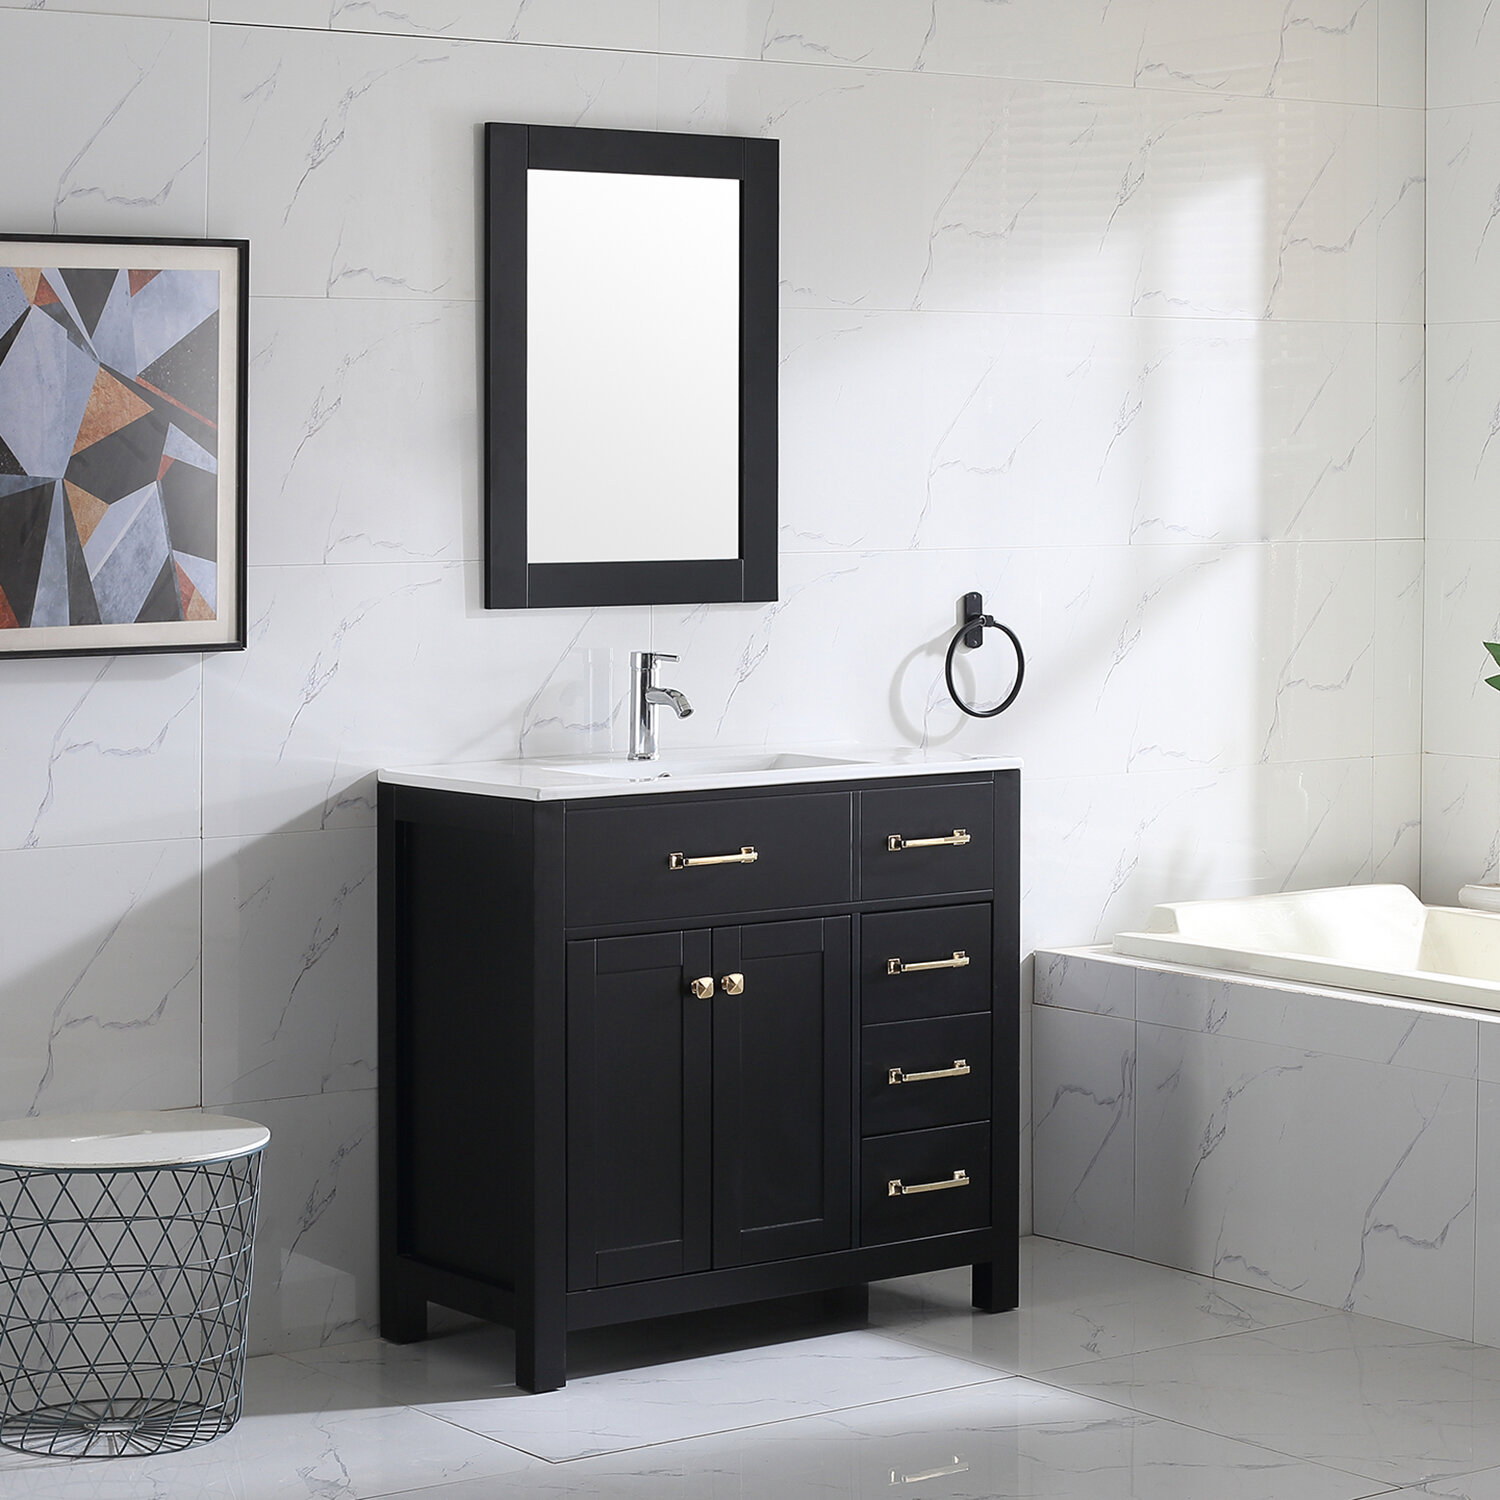 Wonline Undermount Ceramic Shaker 35 Single Bathroom Vanity Set With Mirror Reviews Wayfair